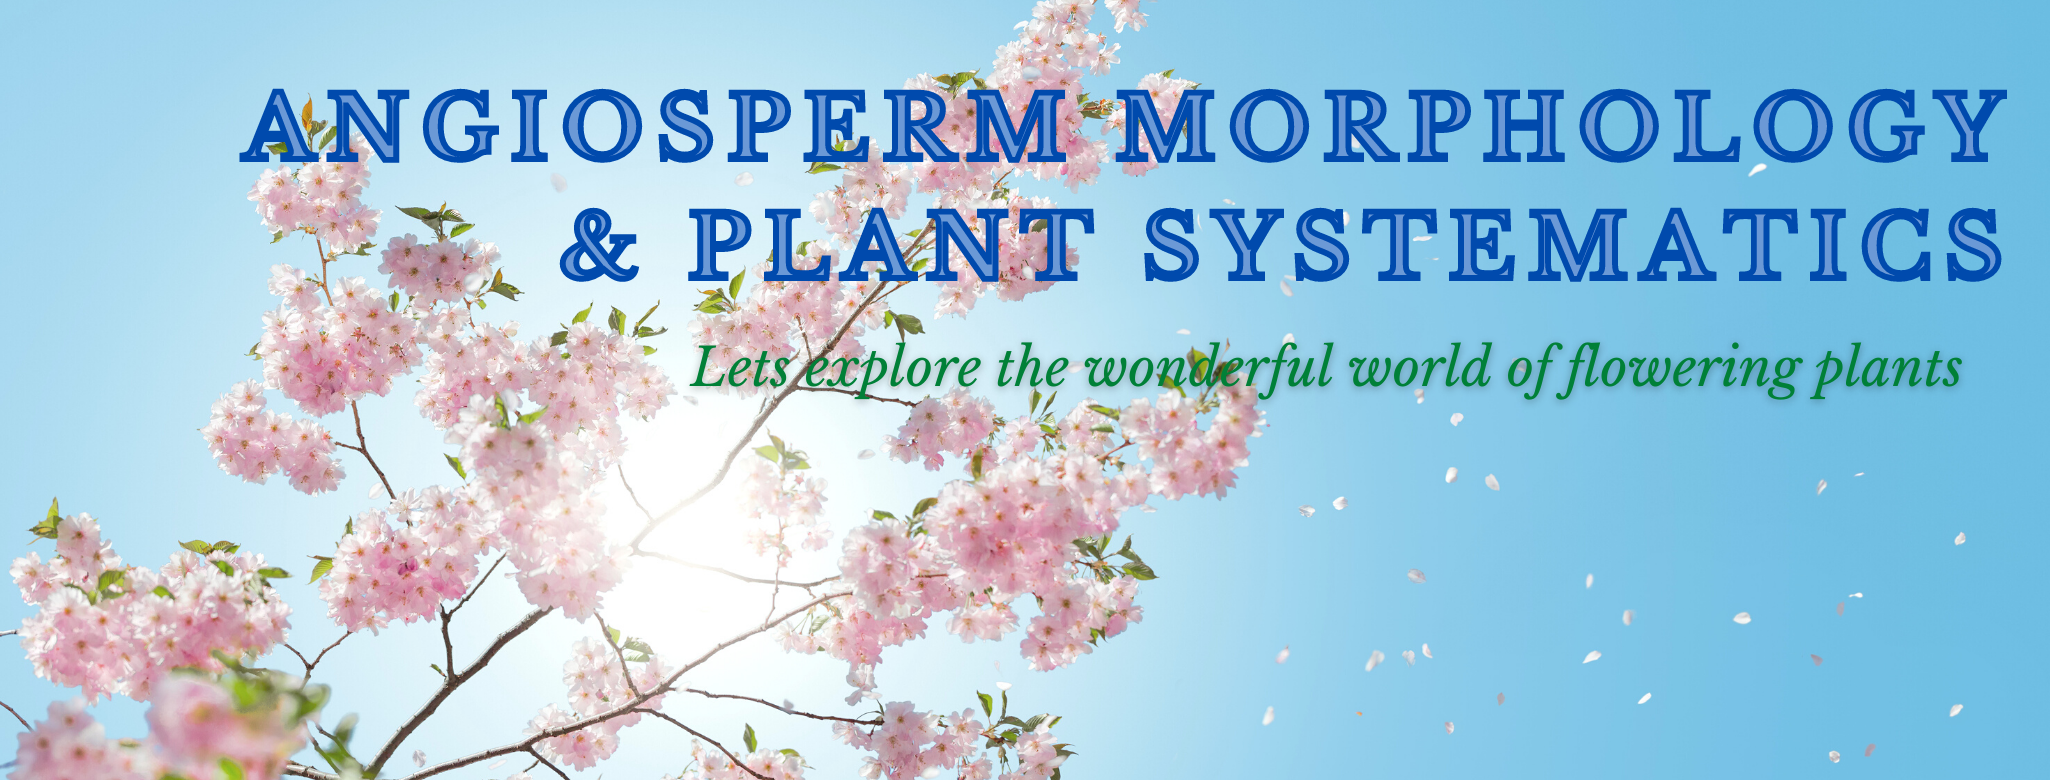 ANGIOSPERM MORPHOLOGY & PLANT SYSTEMATICS